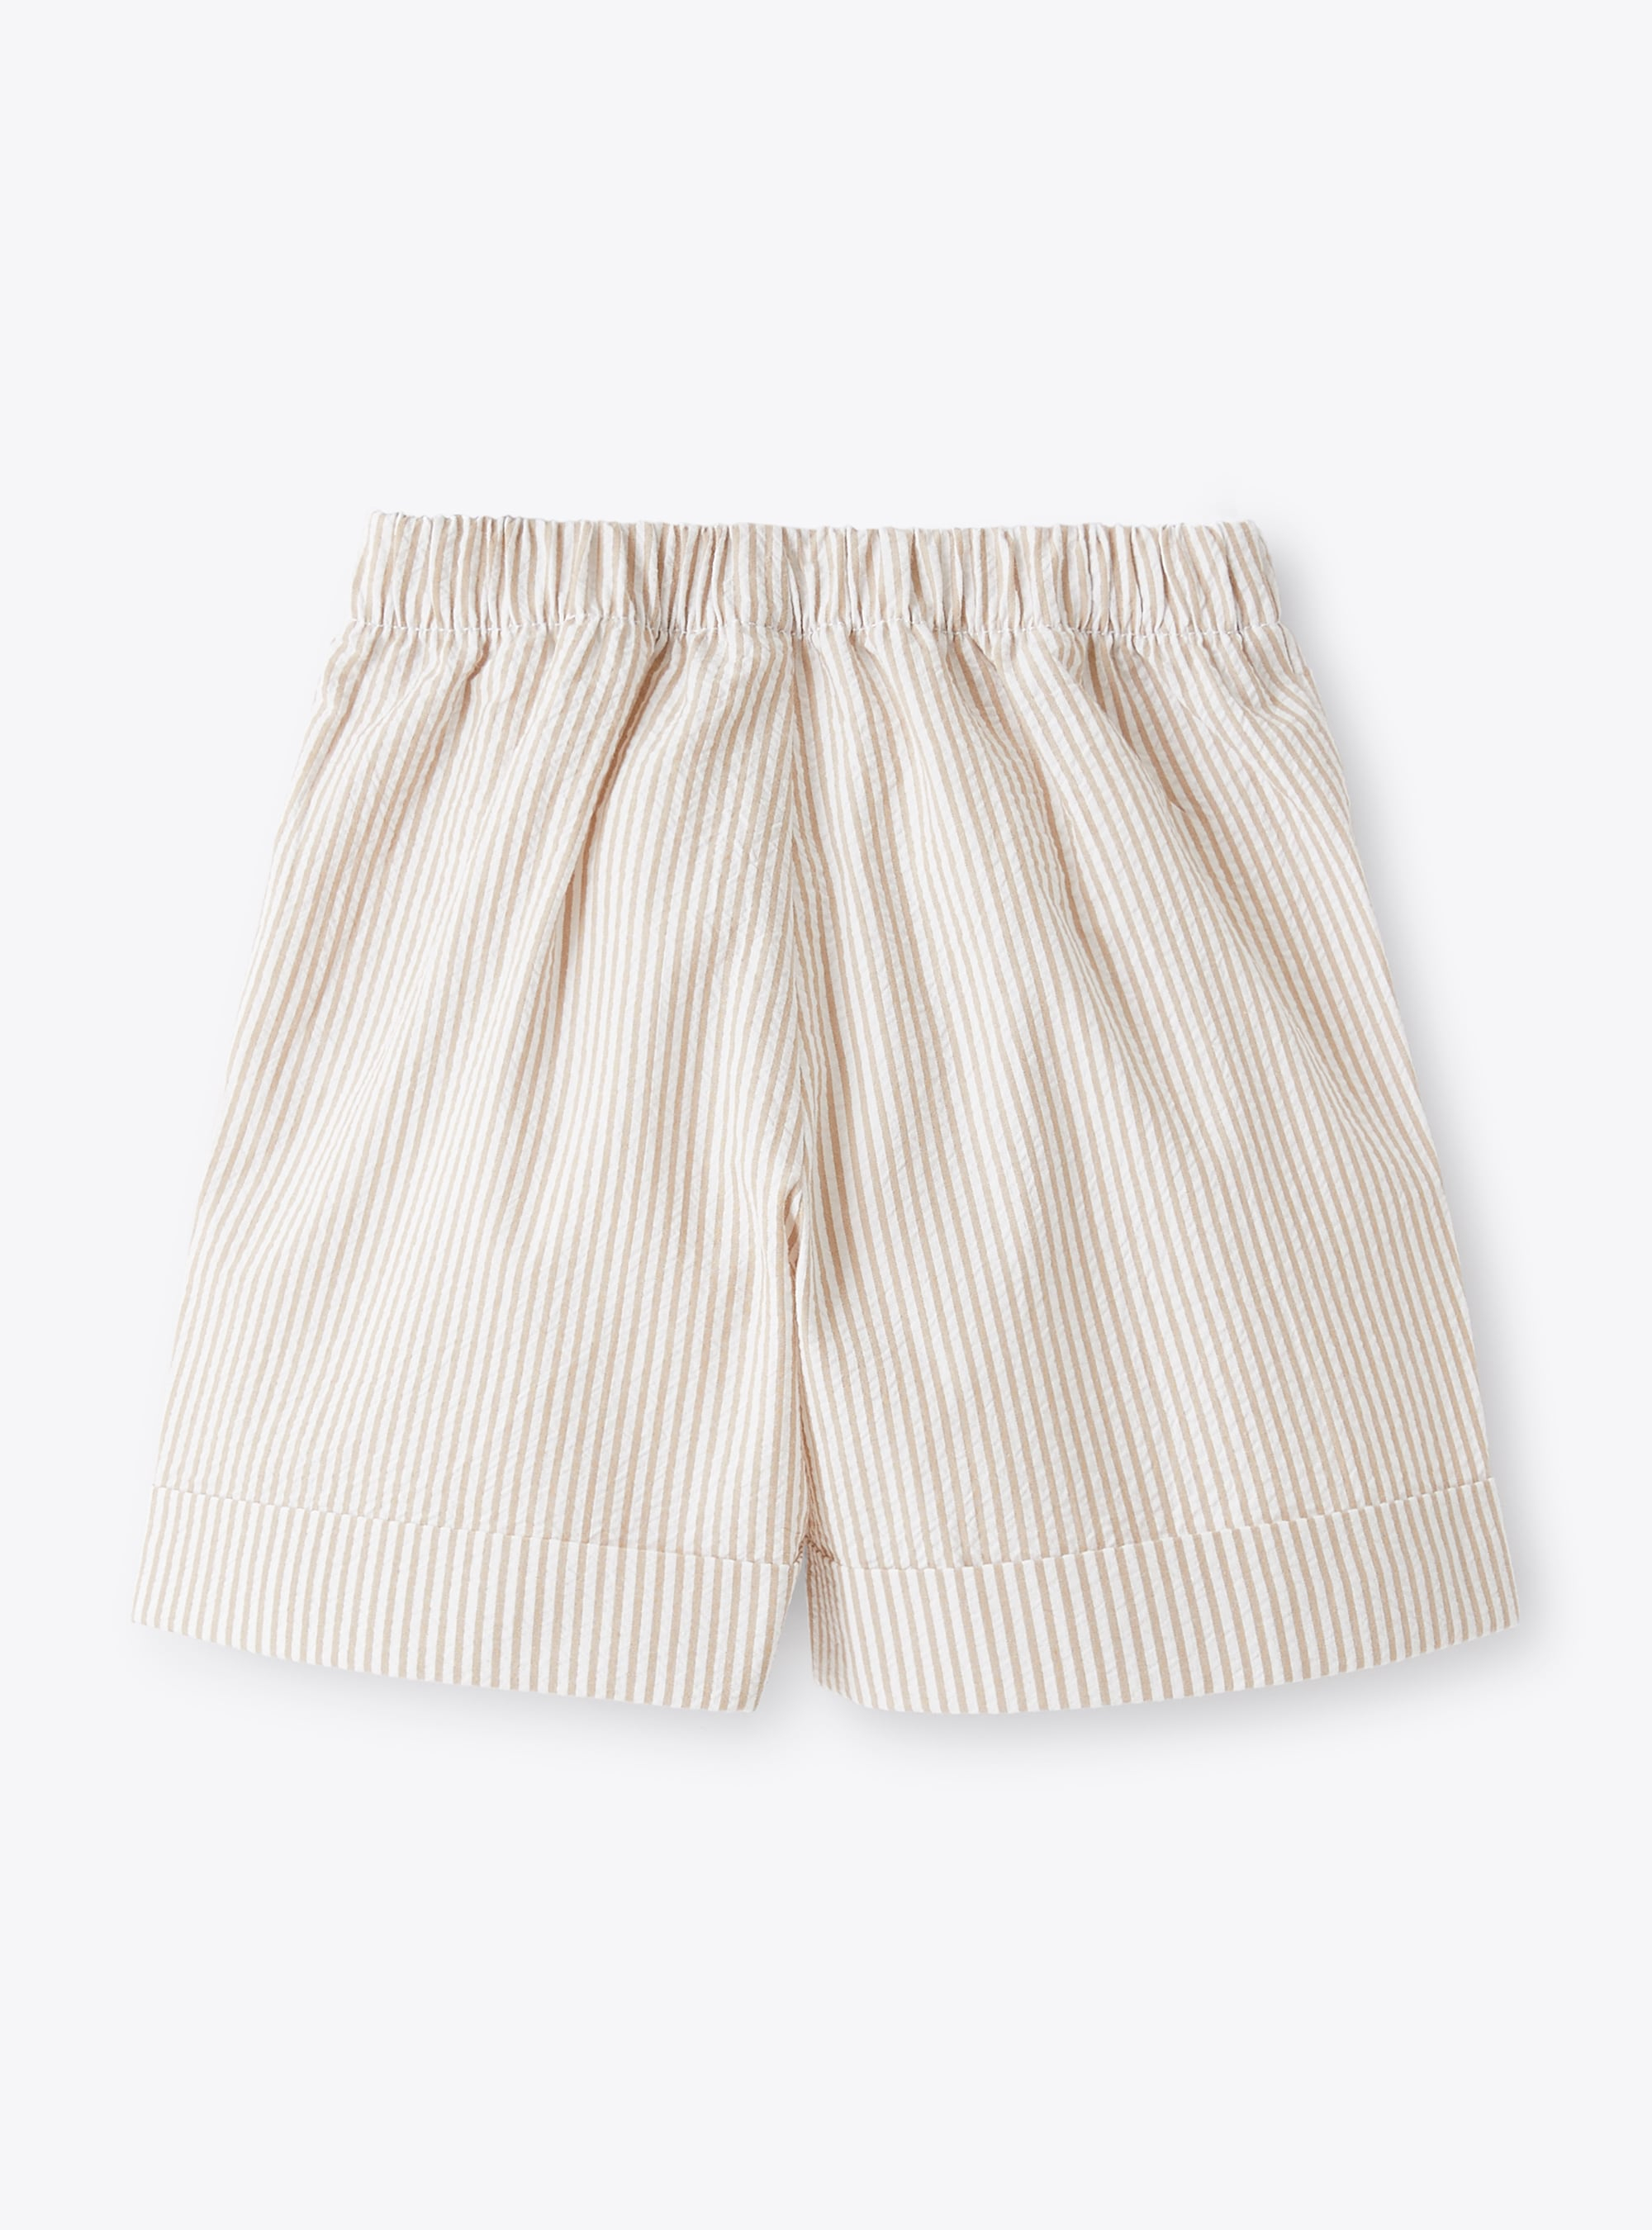 Bermuda shorts in beige seersucker - Beige | Il Gufo